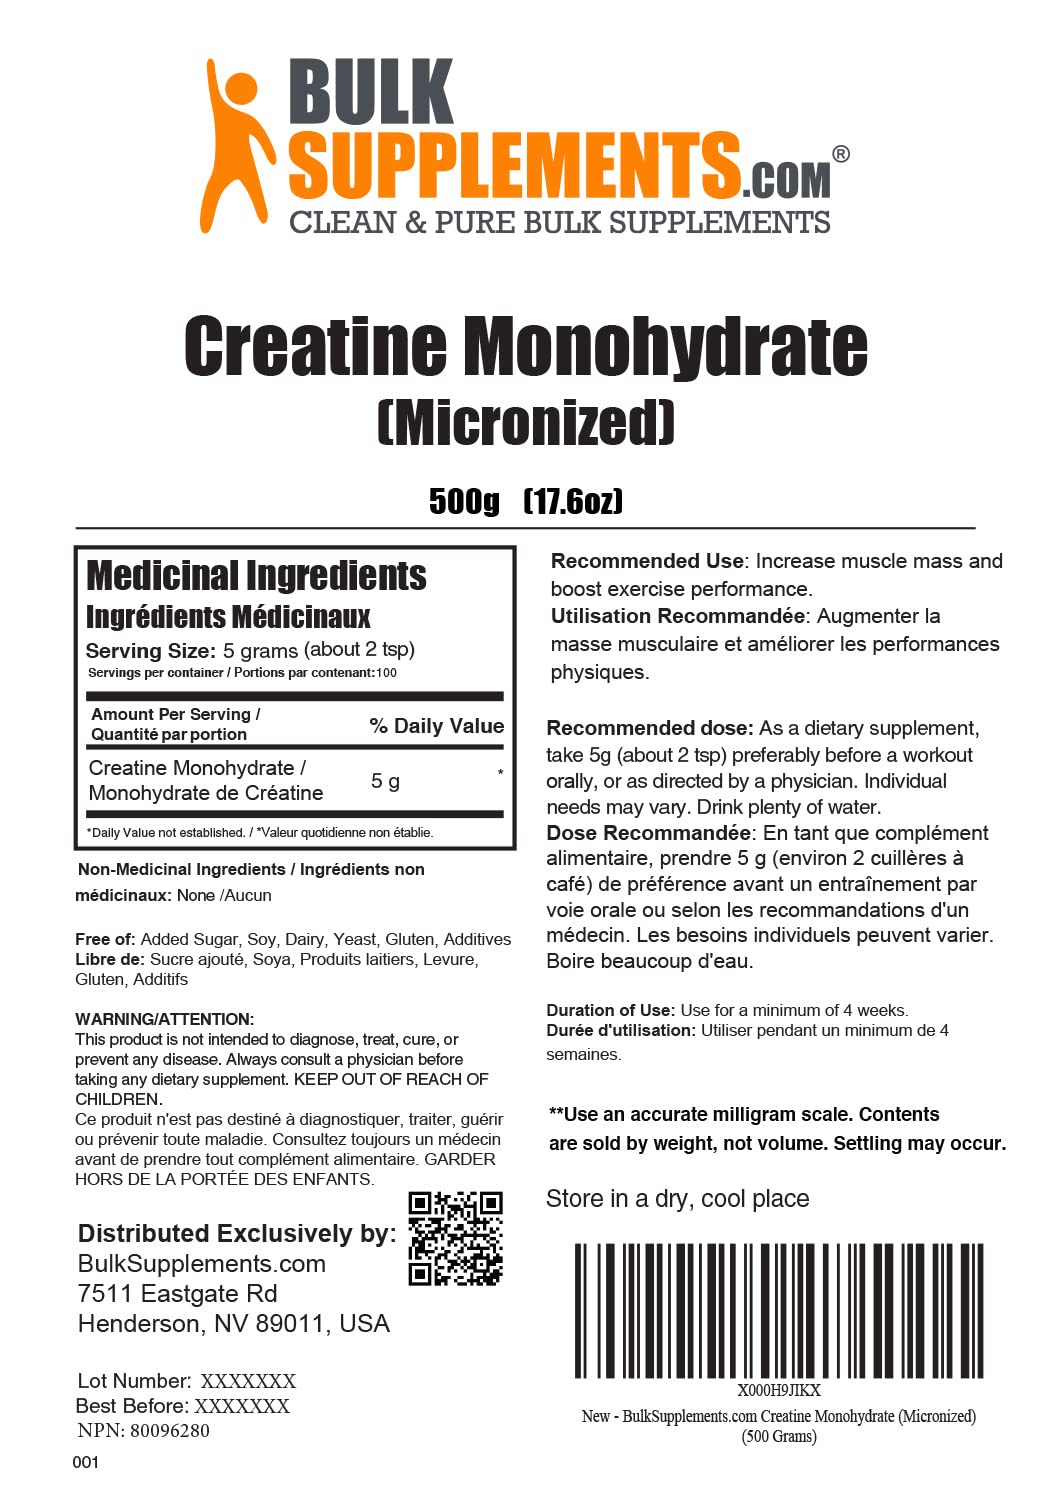 BULKSUPPLEMENTS.COM L-Citrulline Malate 2:1 Powder, 500g, with Creatine Monohydrate Powder (Micronized Creatine), 500g Bundles